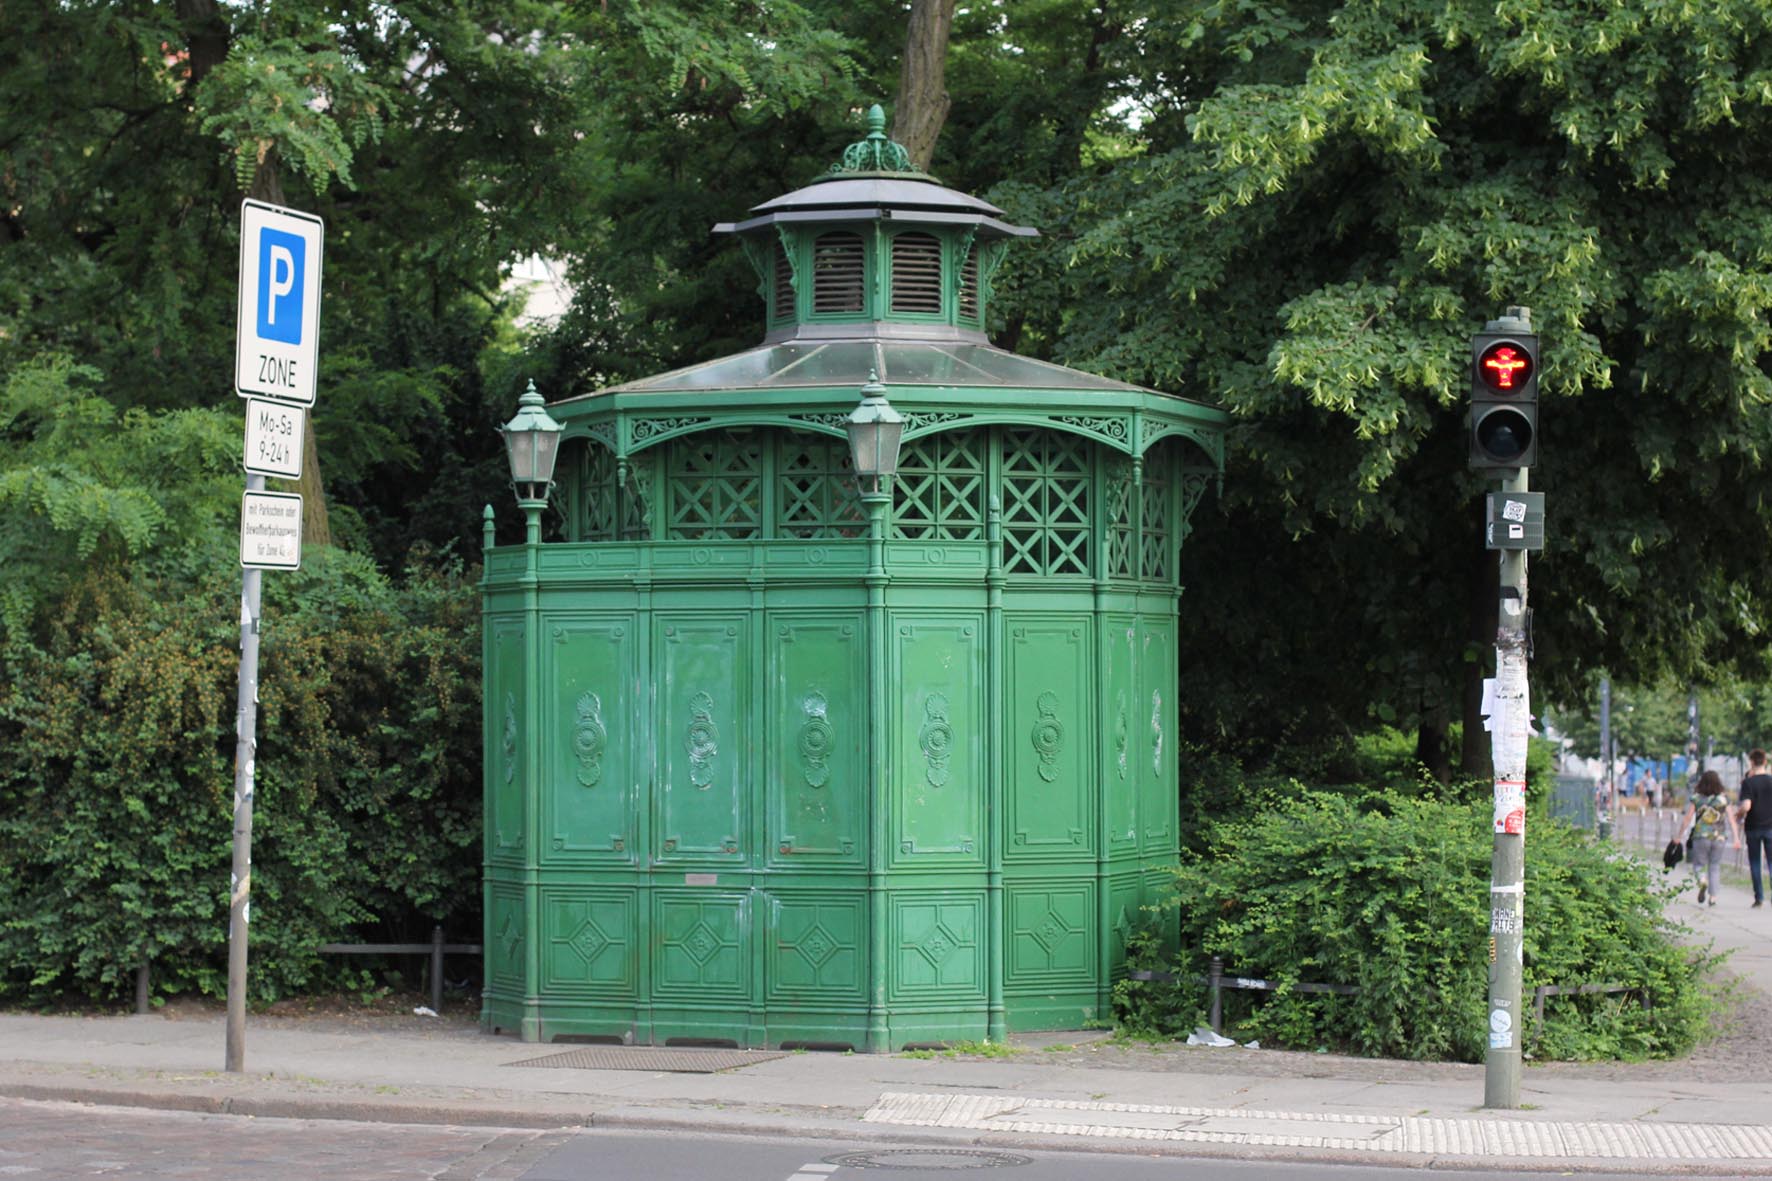 Café Achteck - Senefelderplatz - an example of Berlin's classic 19th century green cast iron public toilets